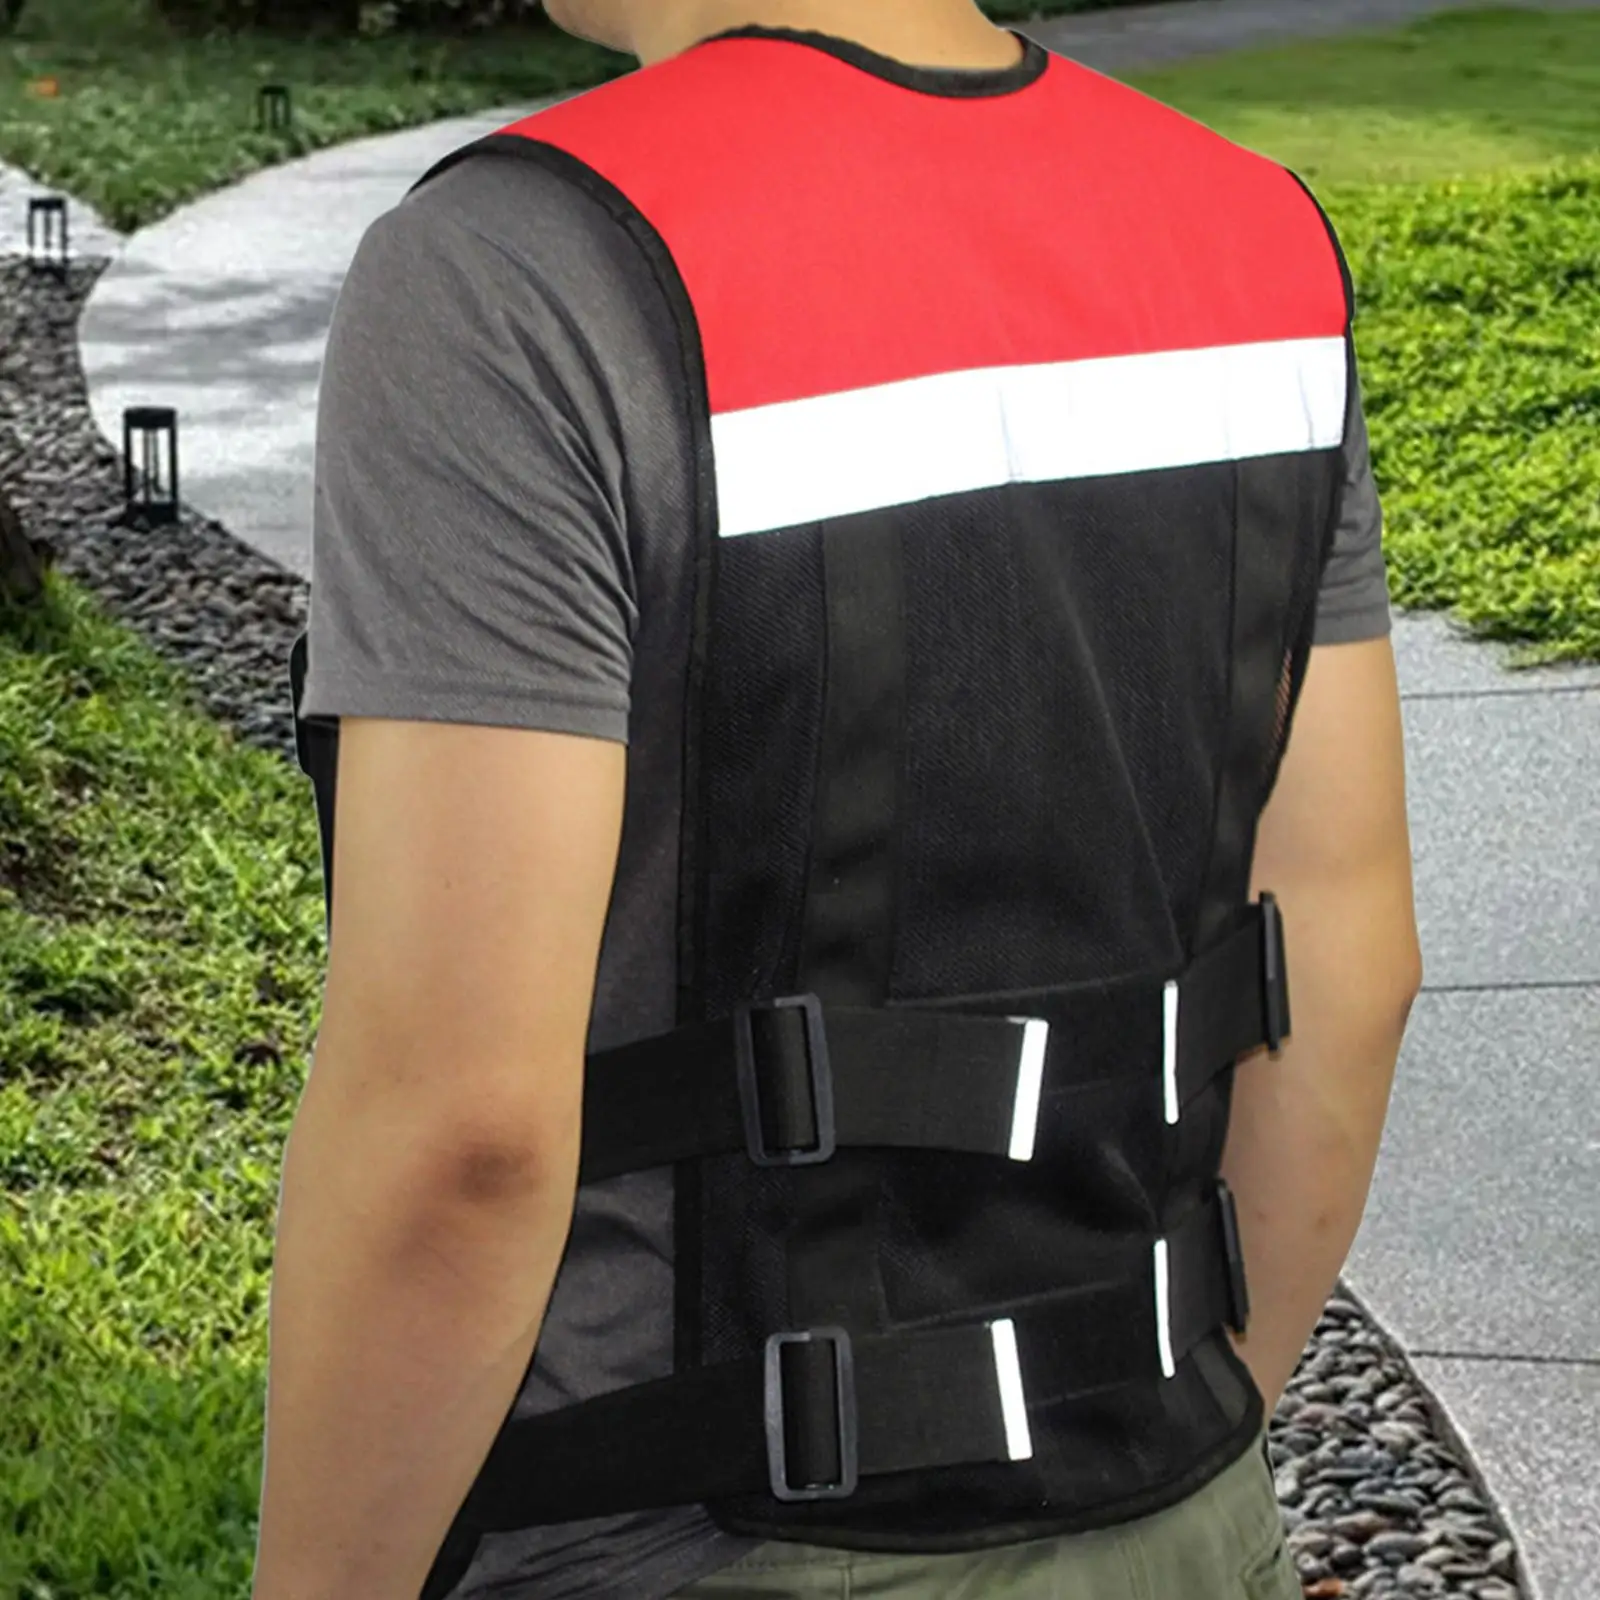 Safety Vest with Reflective Strips Zipper Front Construction Vest